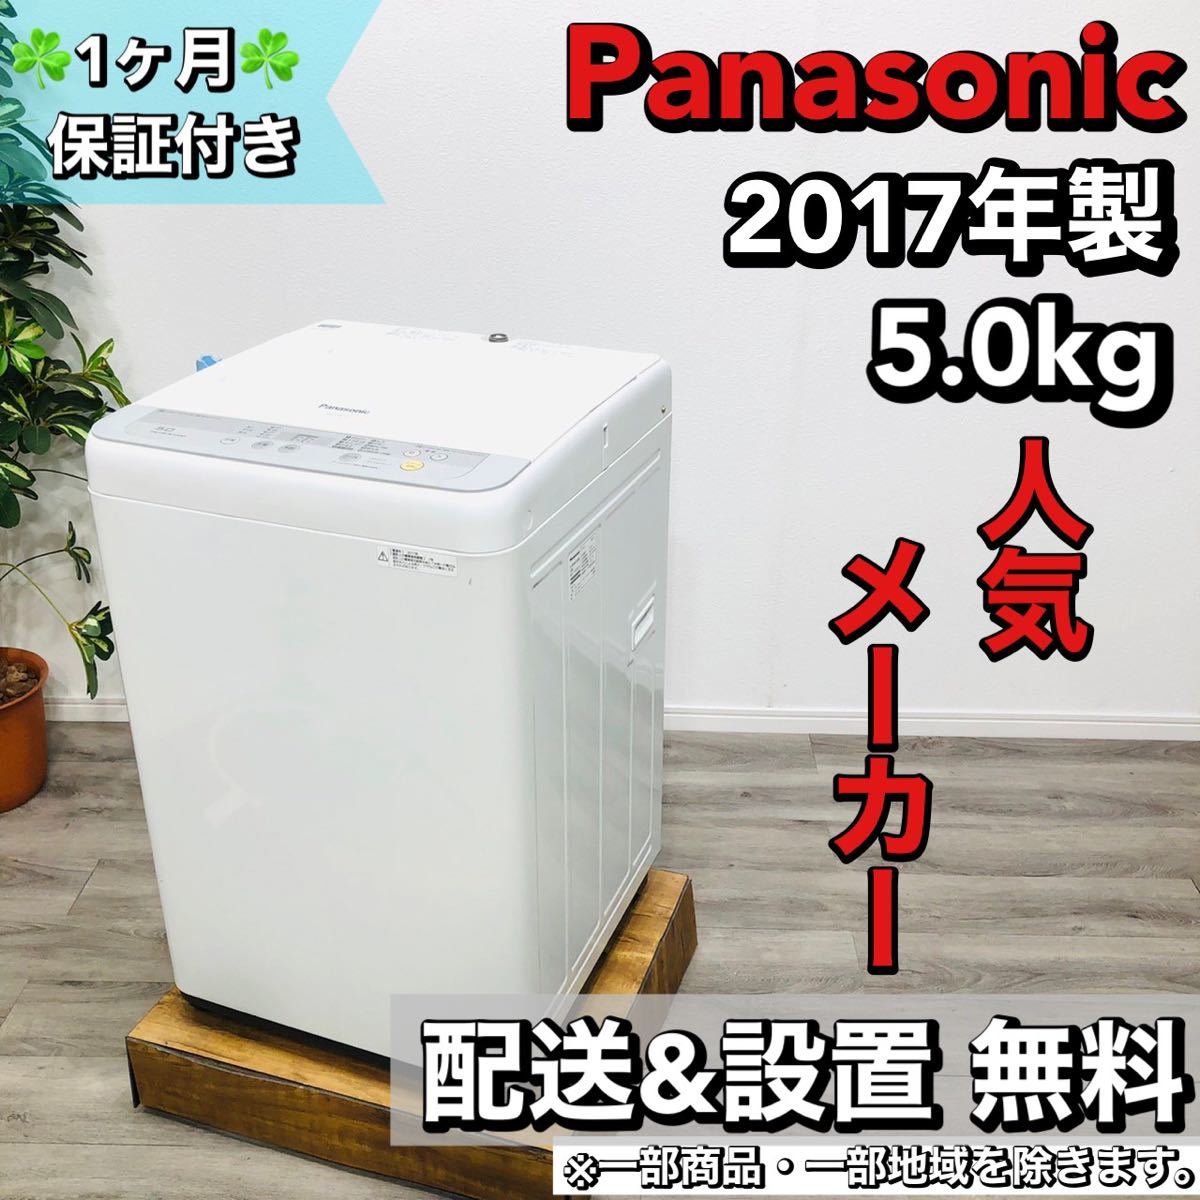 Panasonic a1652 洗濯機 5.0kg 2017年製 4